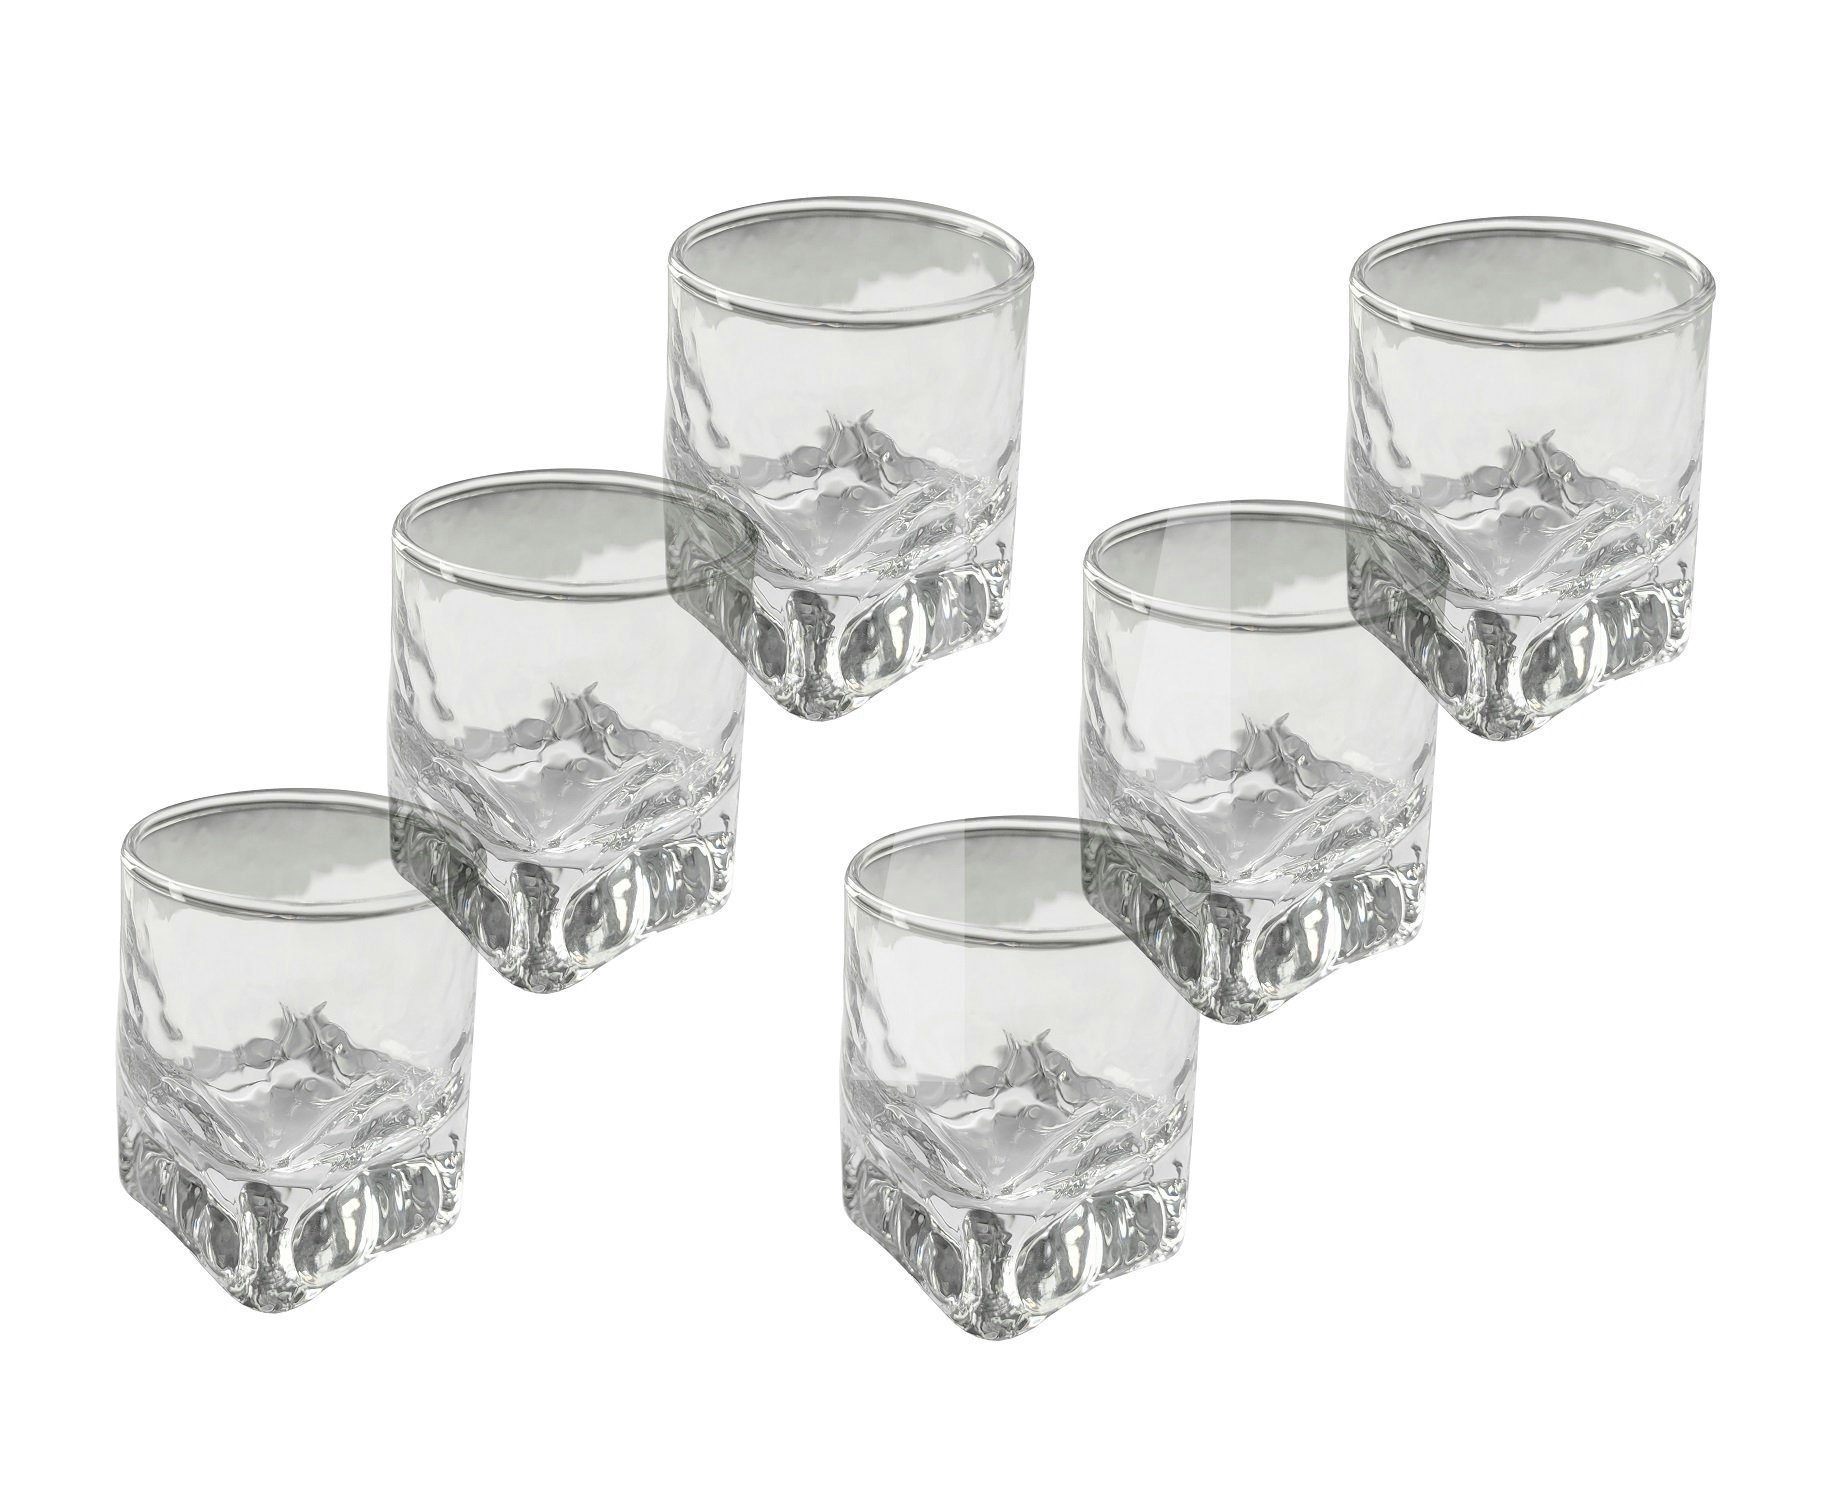 Provance Schnapsglas 6 x Schnapsglas Schnapsgläser Stamper Shotglas Kristallglas 40ml 4cl, Glas